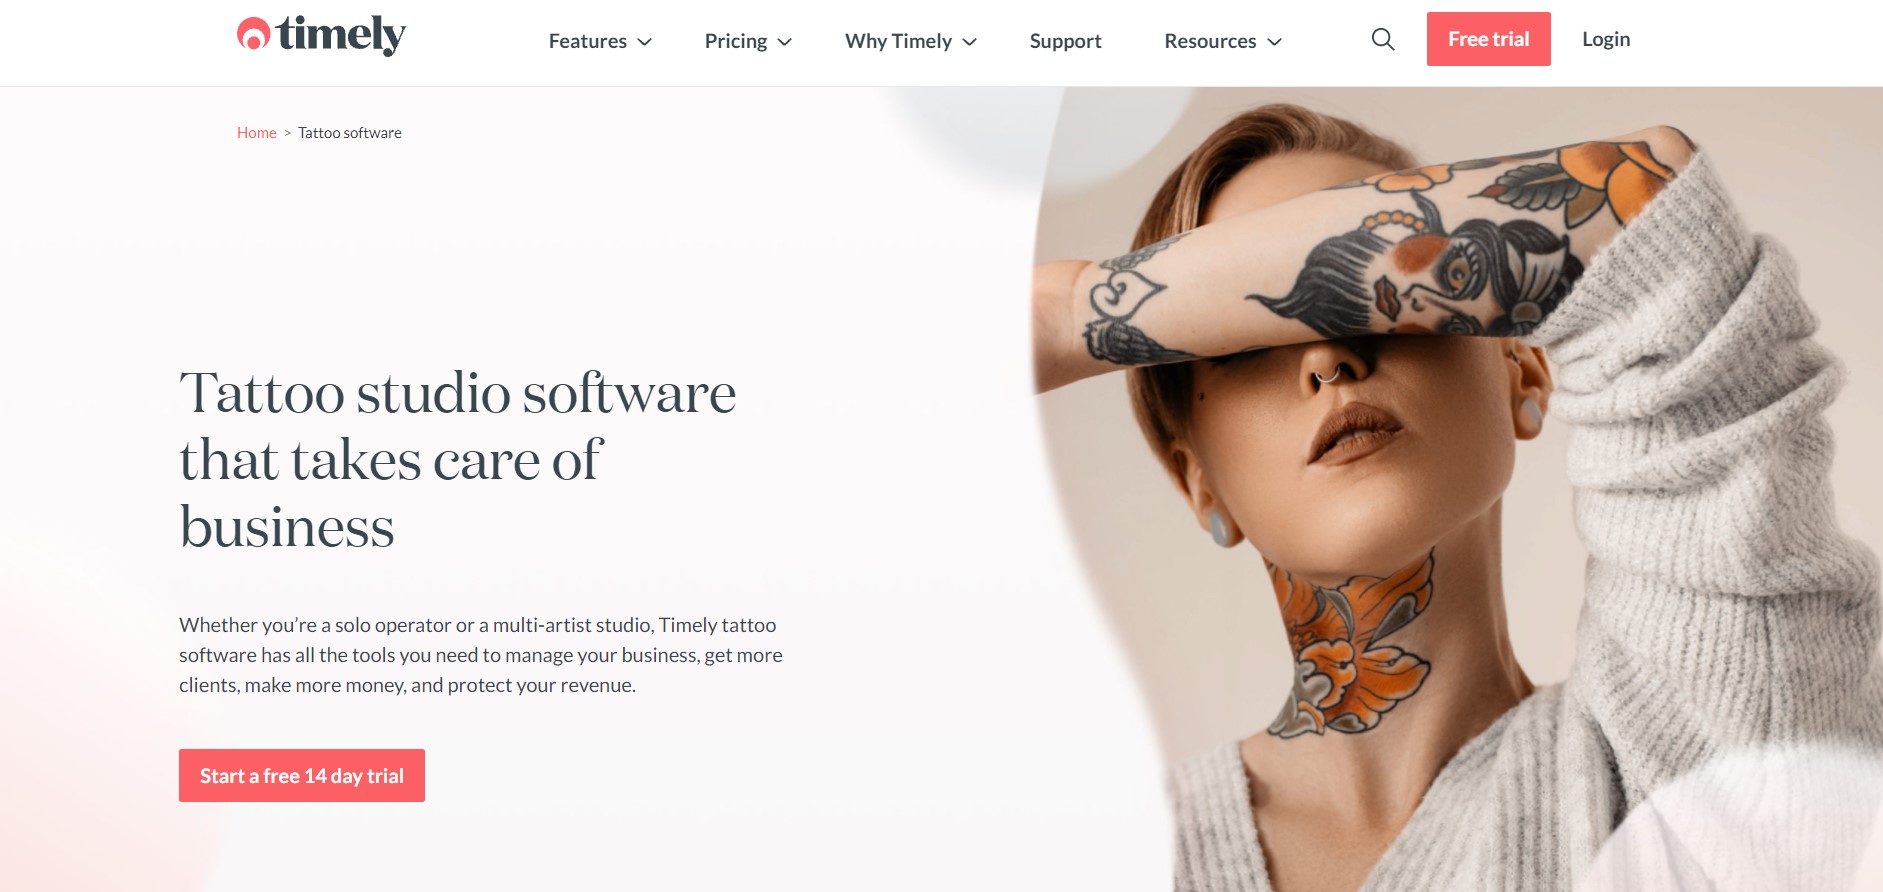 Tattoo Software for Tattoo Shops & Tattoo Artists- Set a Time